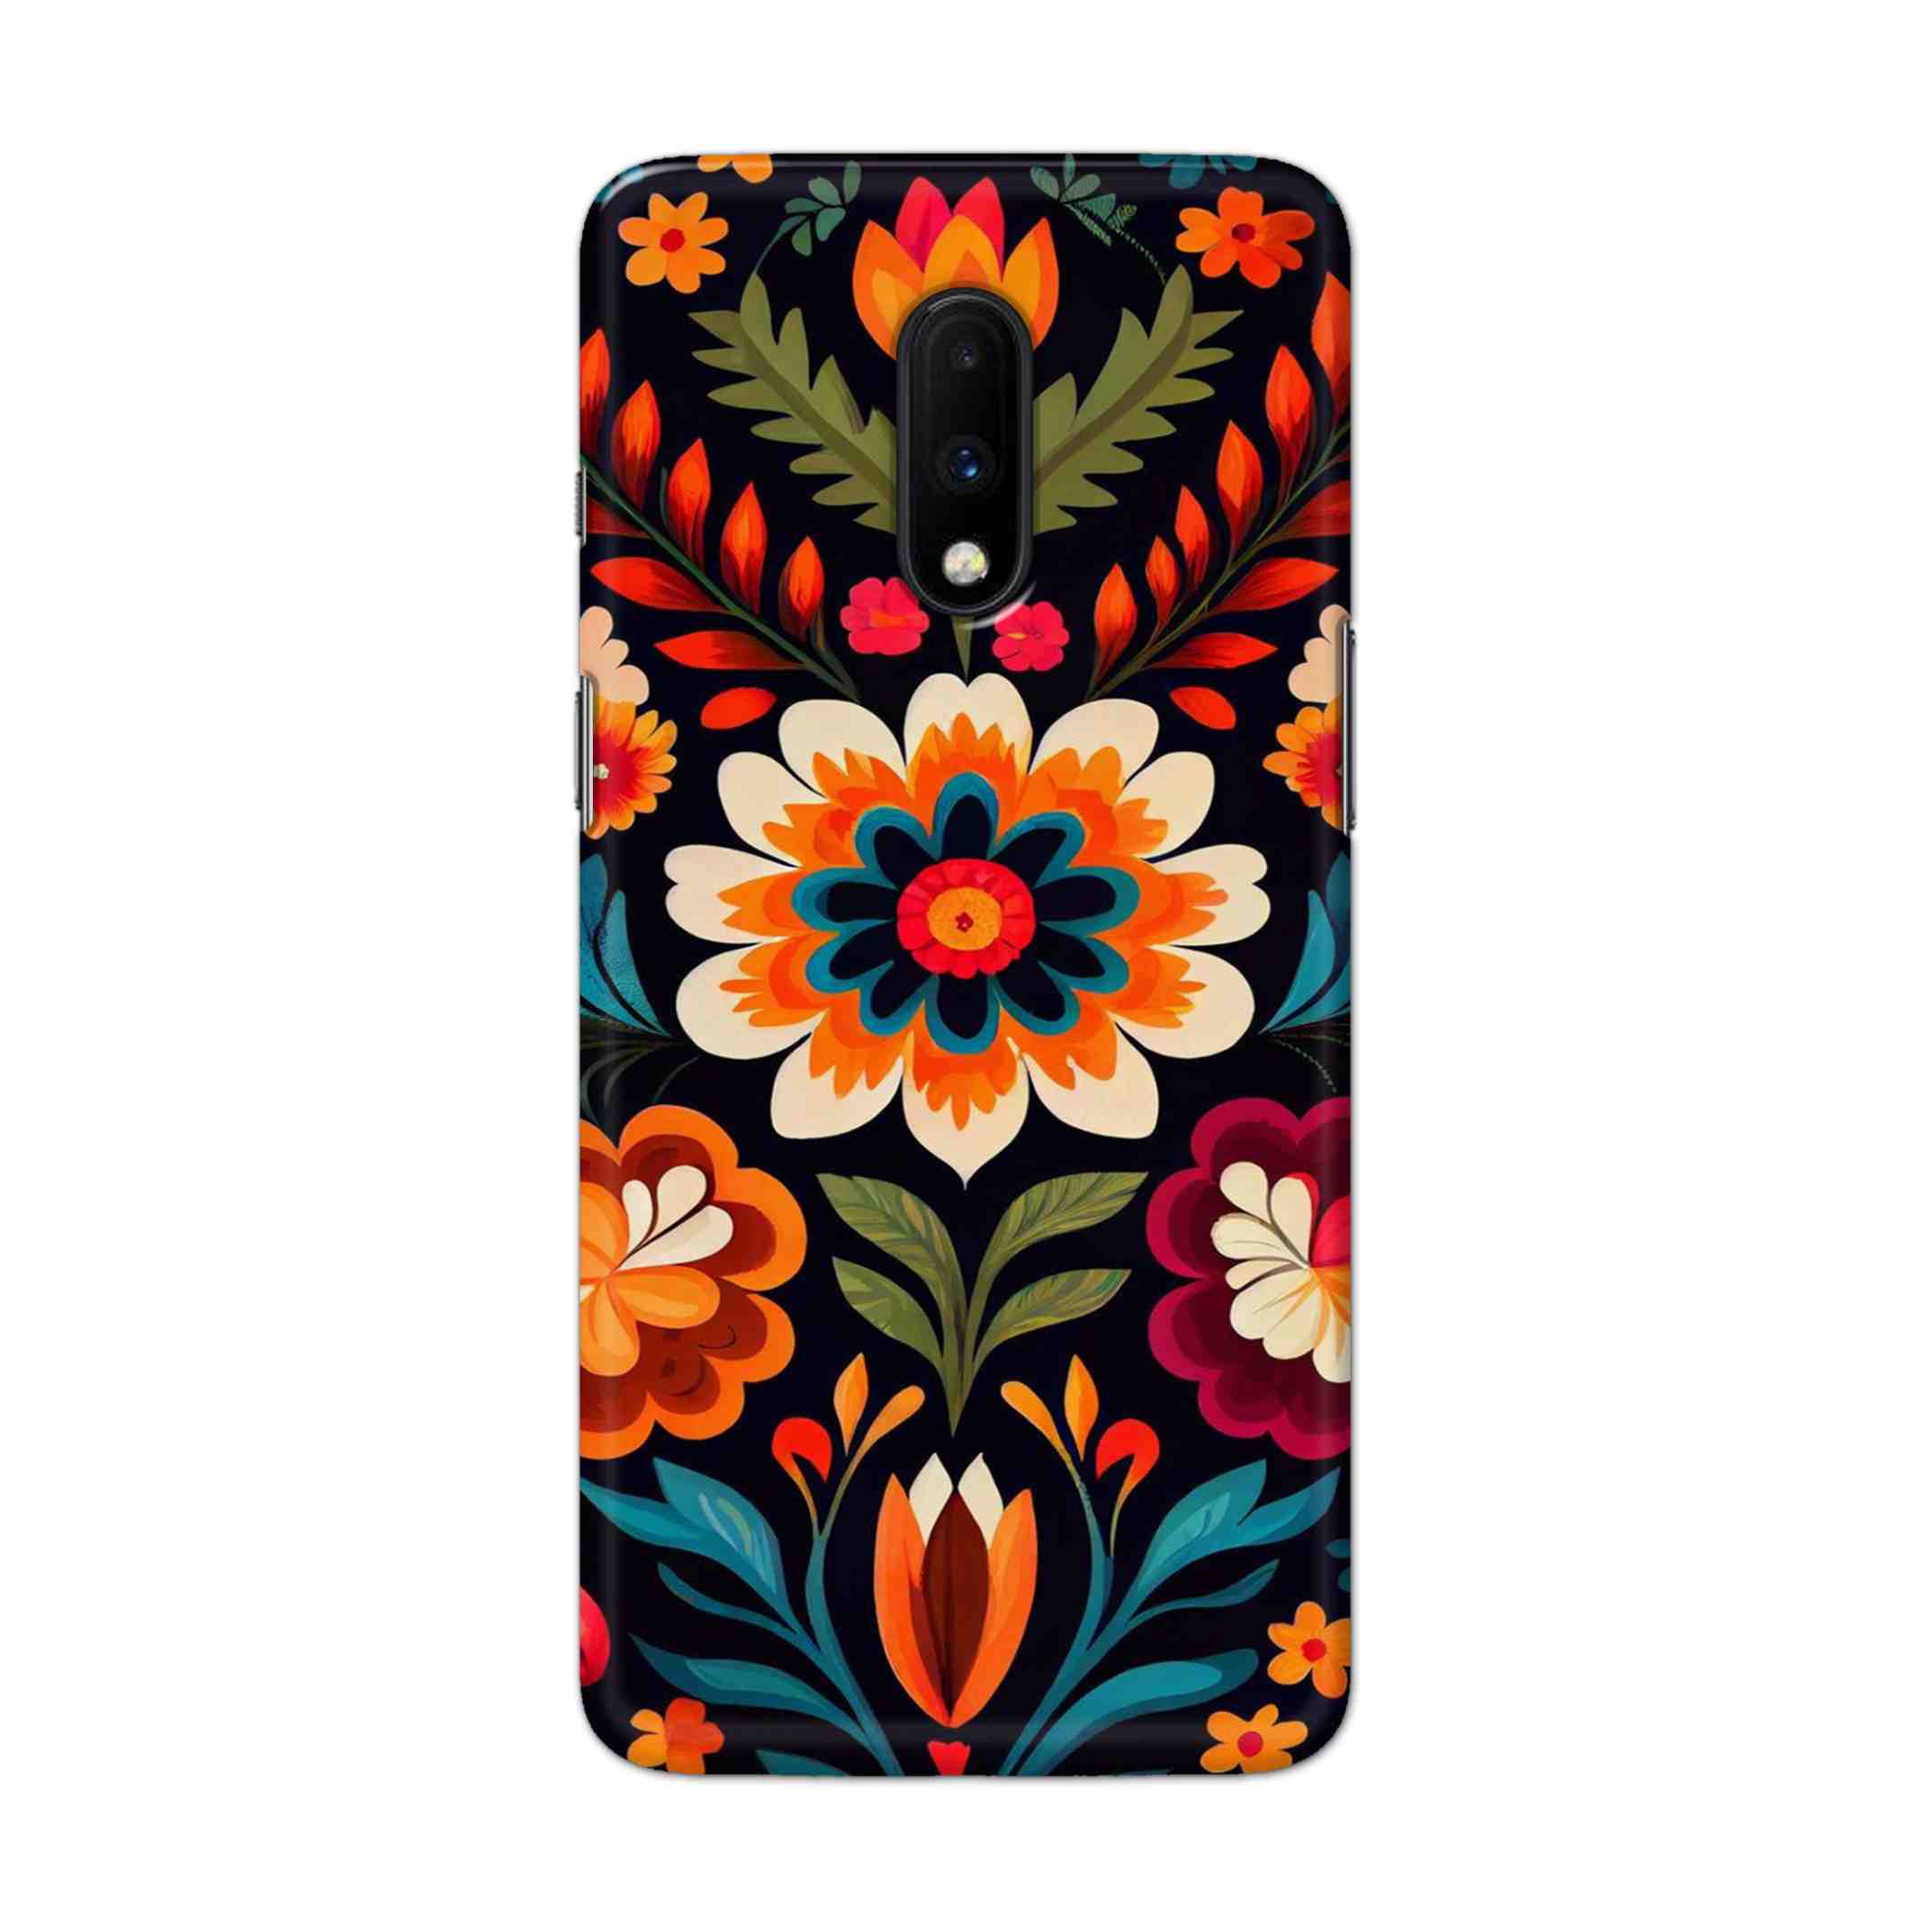 Buy Flower Hard Back Mobile Phone Case Cover For OnePlus 7 Online